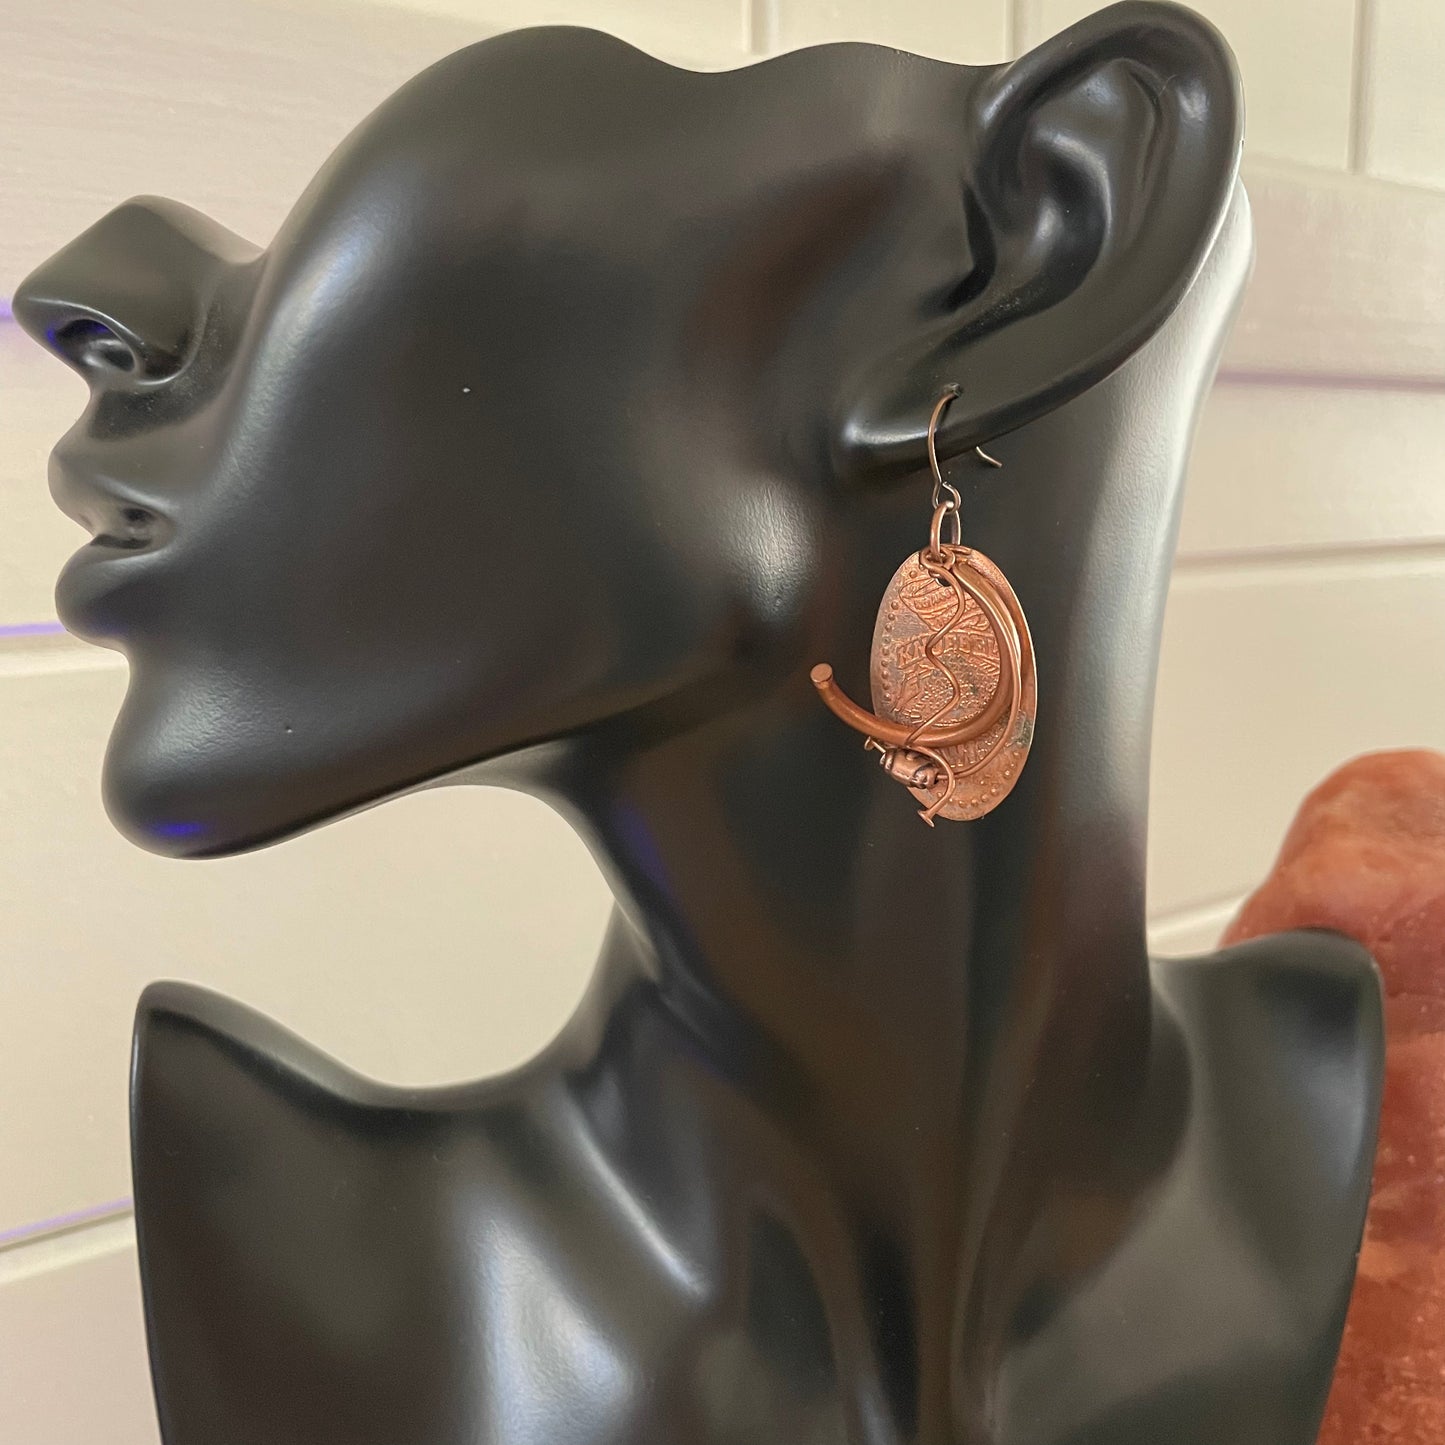 Flattened Penny & Copper Swirl Earrings 2" Handmade Statement Playful Casual Hand Turned Metal Wire